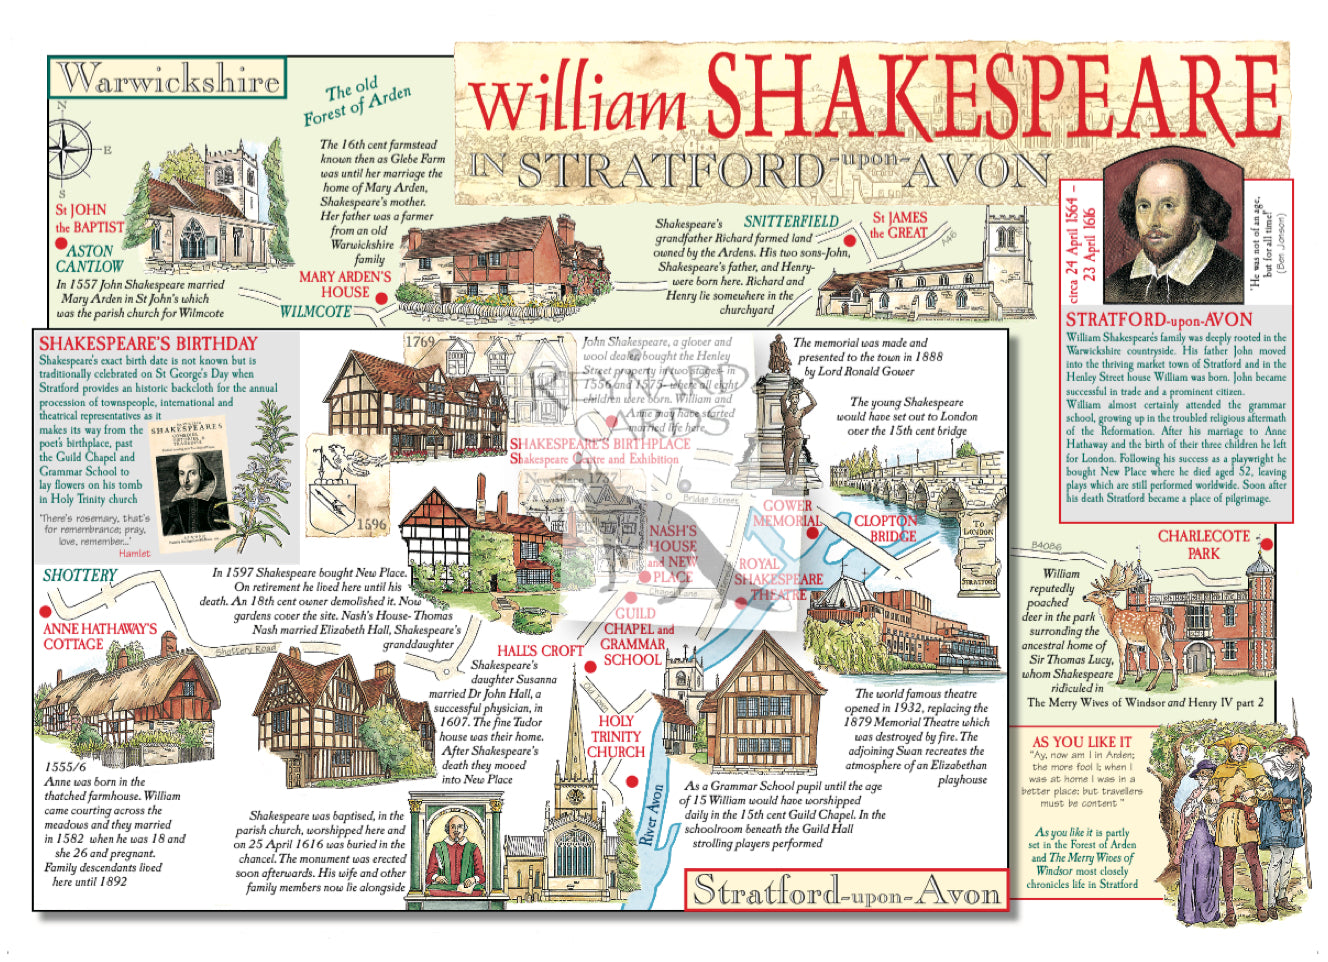 William Shakespeare in Stratford upon Avon